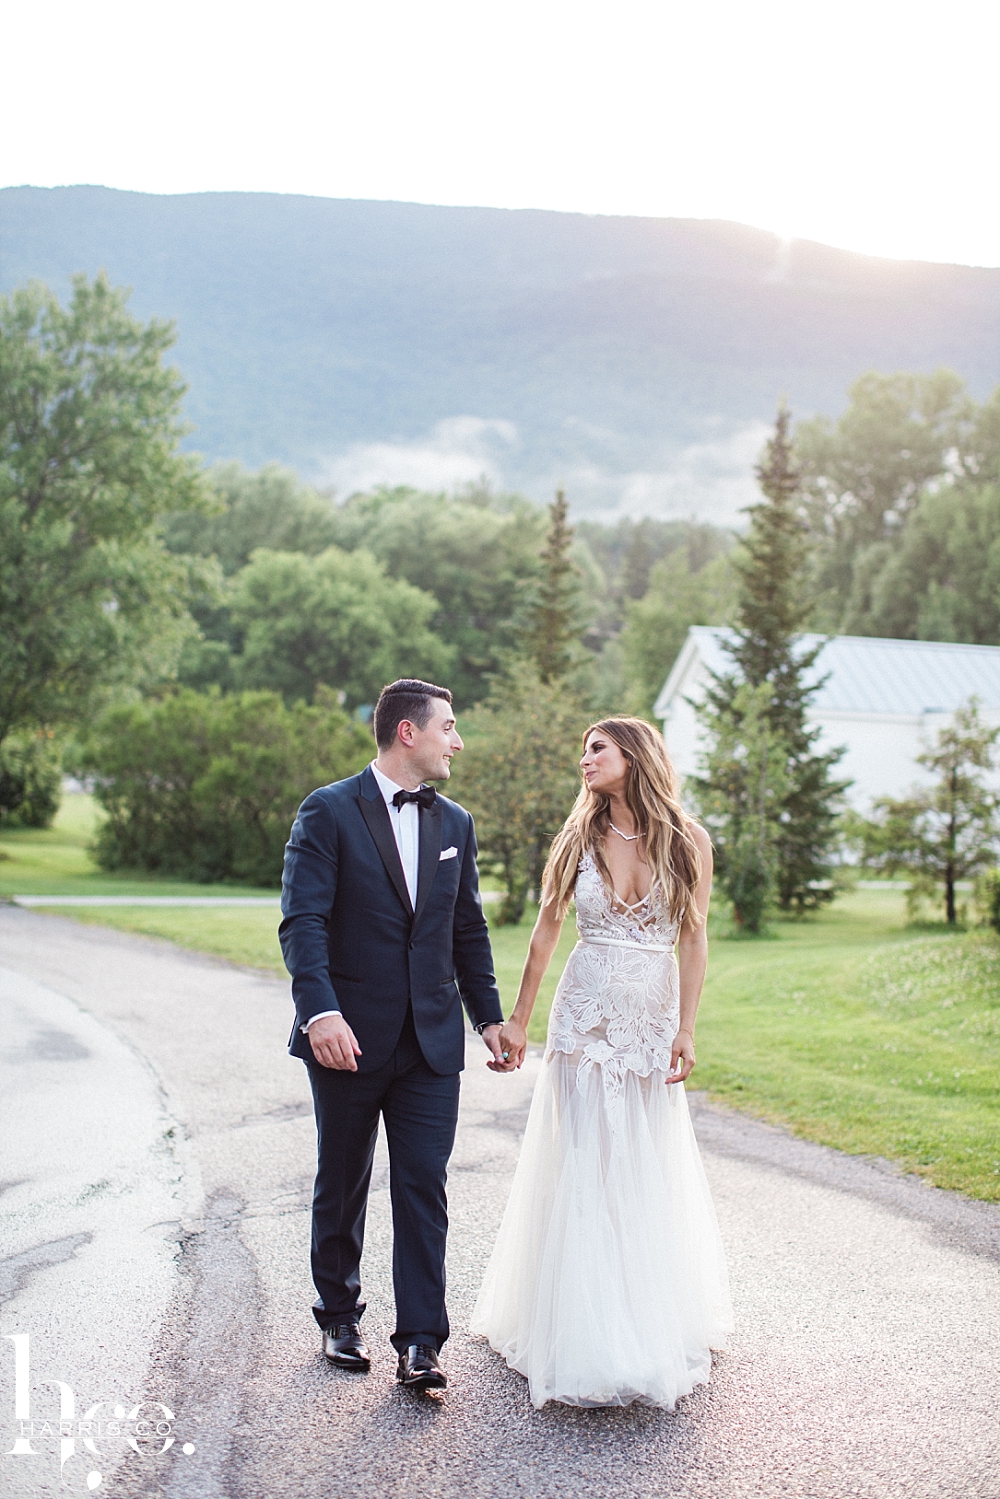 Nick & Marnie | The Equinox Resort Wedding | Wedding Photography | The Harris Co | theharrisco.com